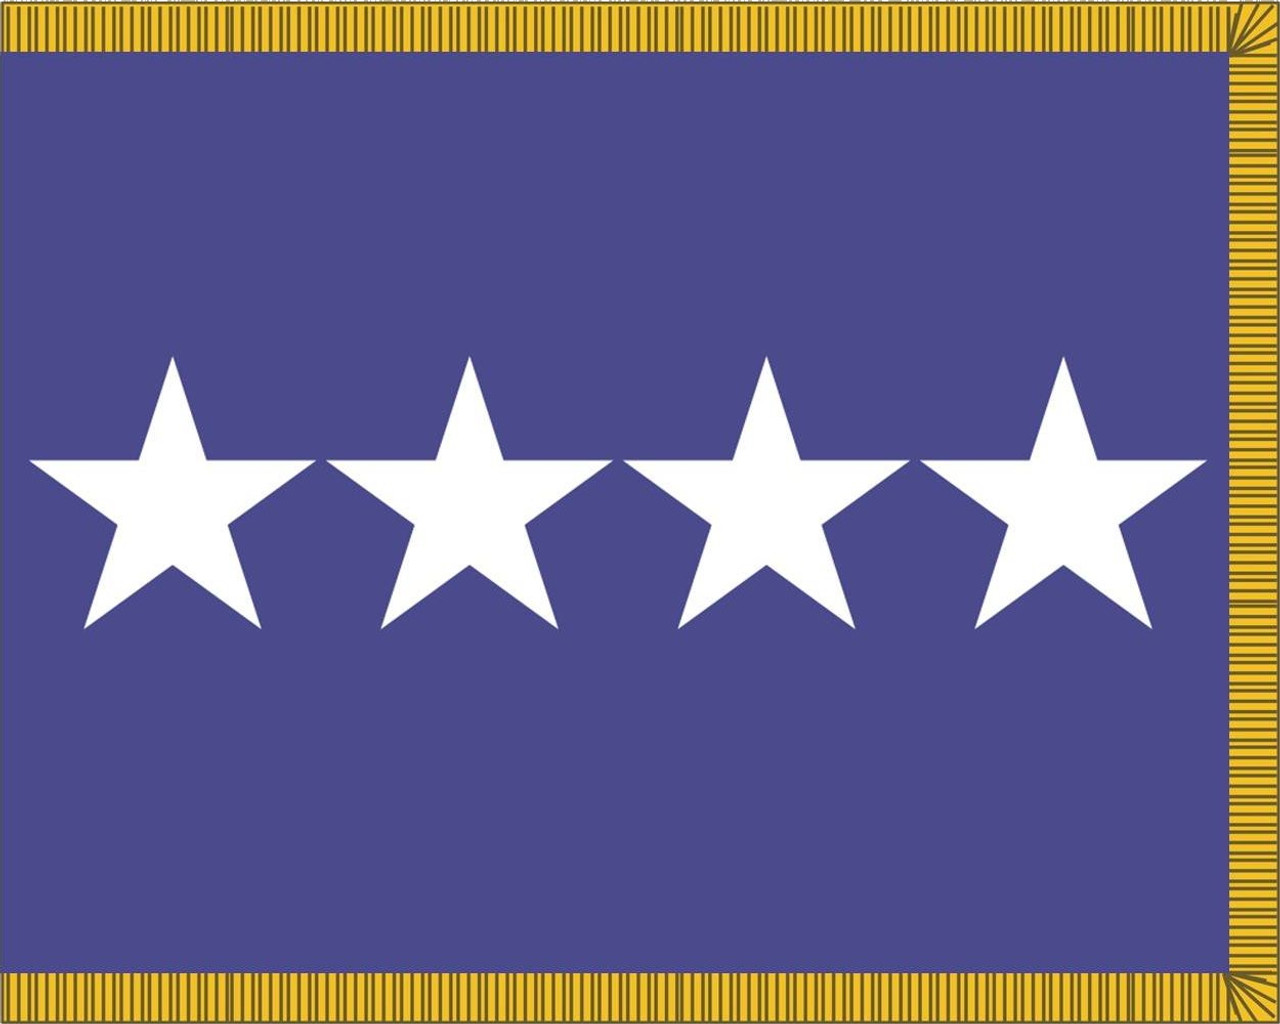 Air Force General Flag, 4 Star Nylon Applique with Pole Hem and Gold Fringe, Size 3' X 5', GAF4103054